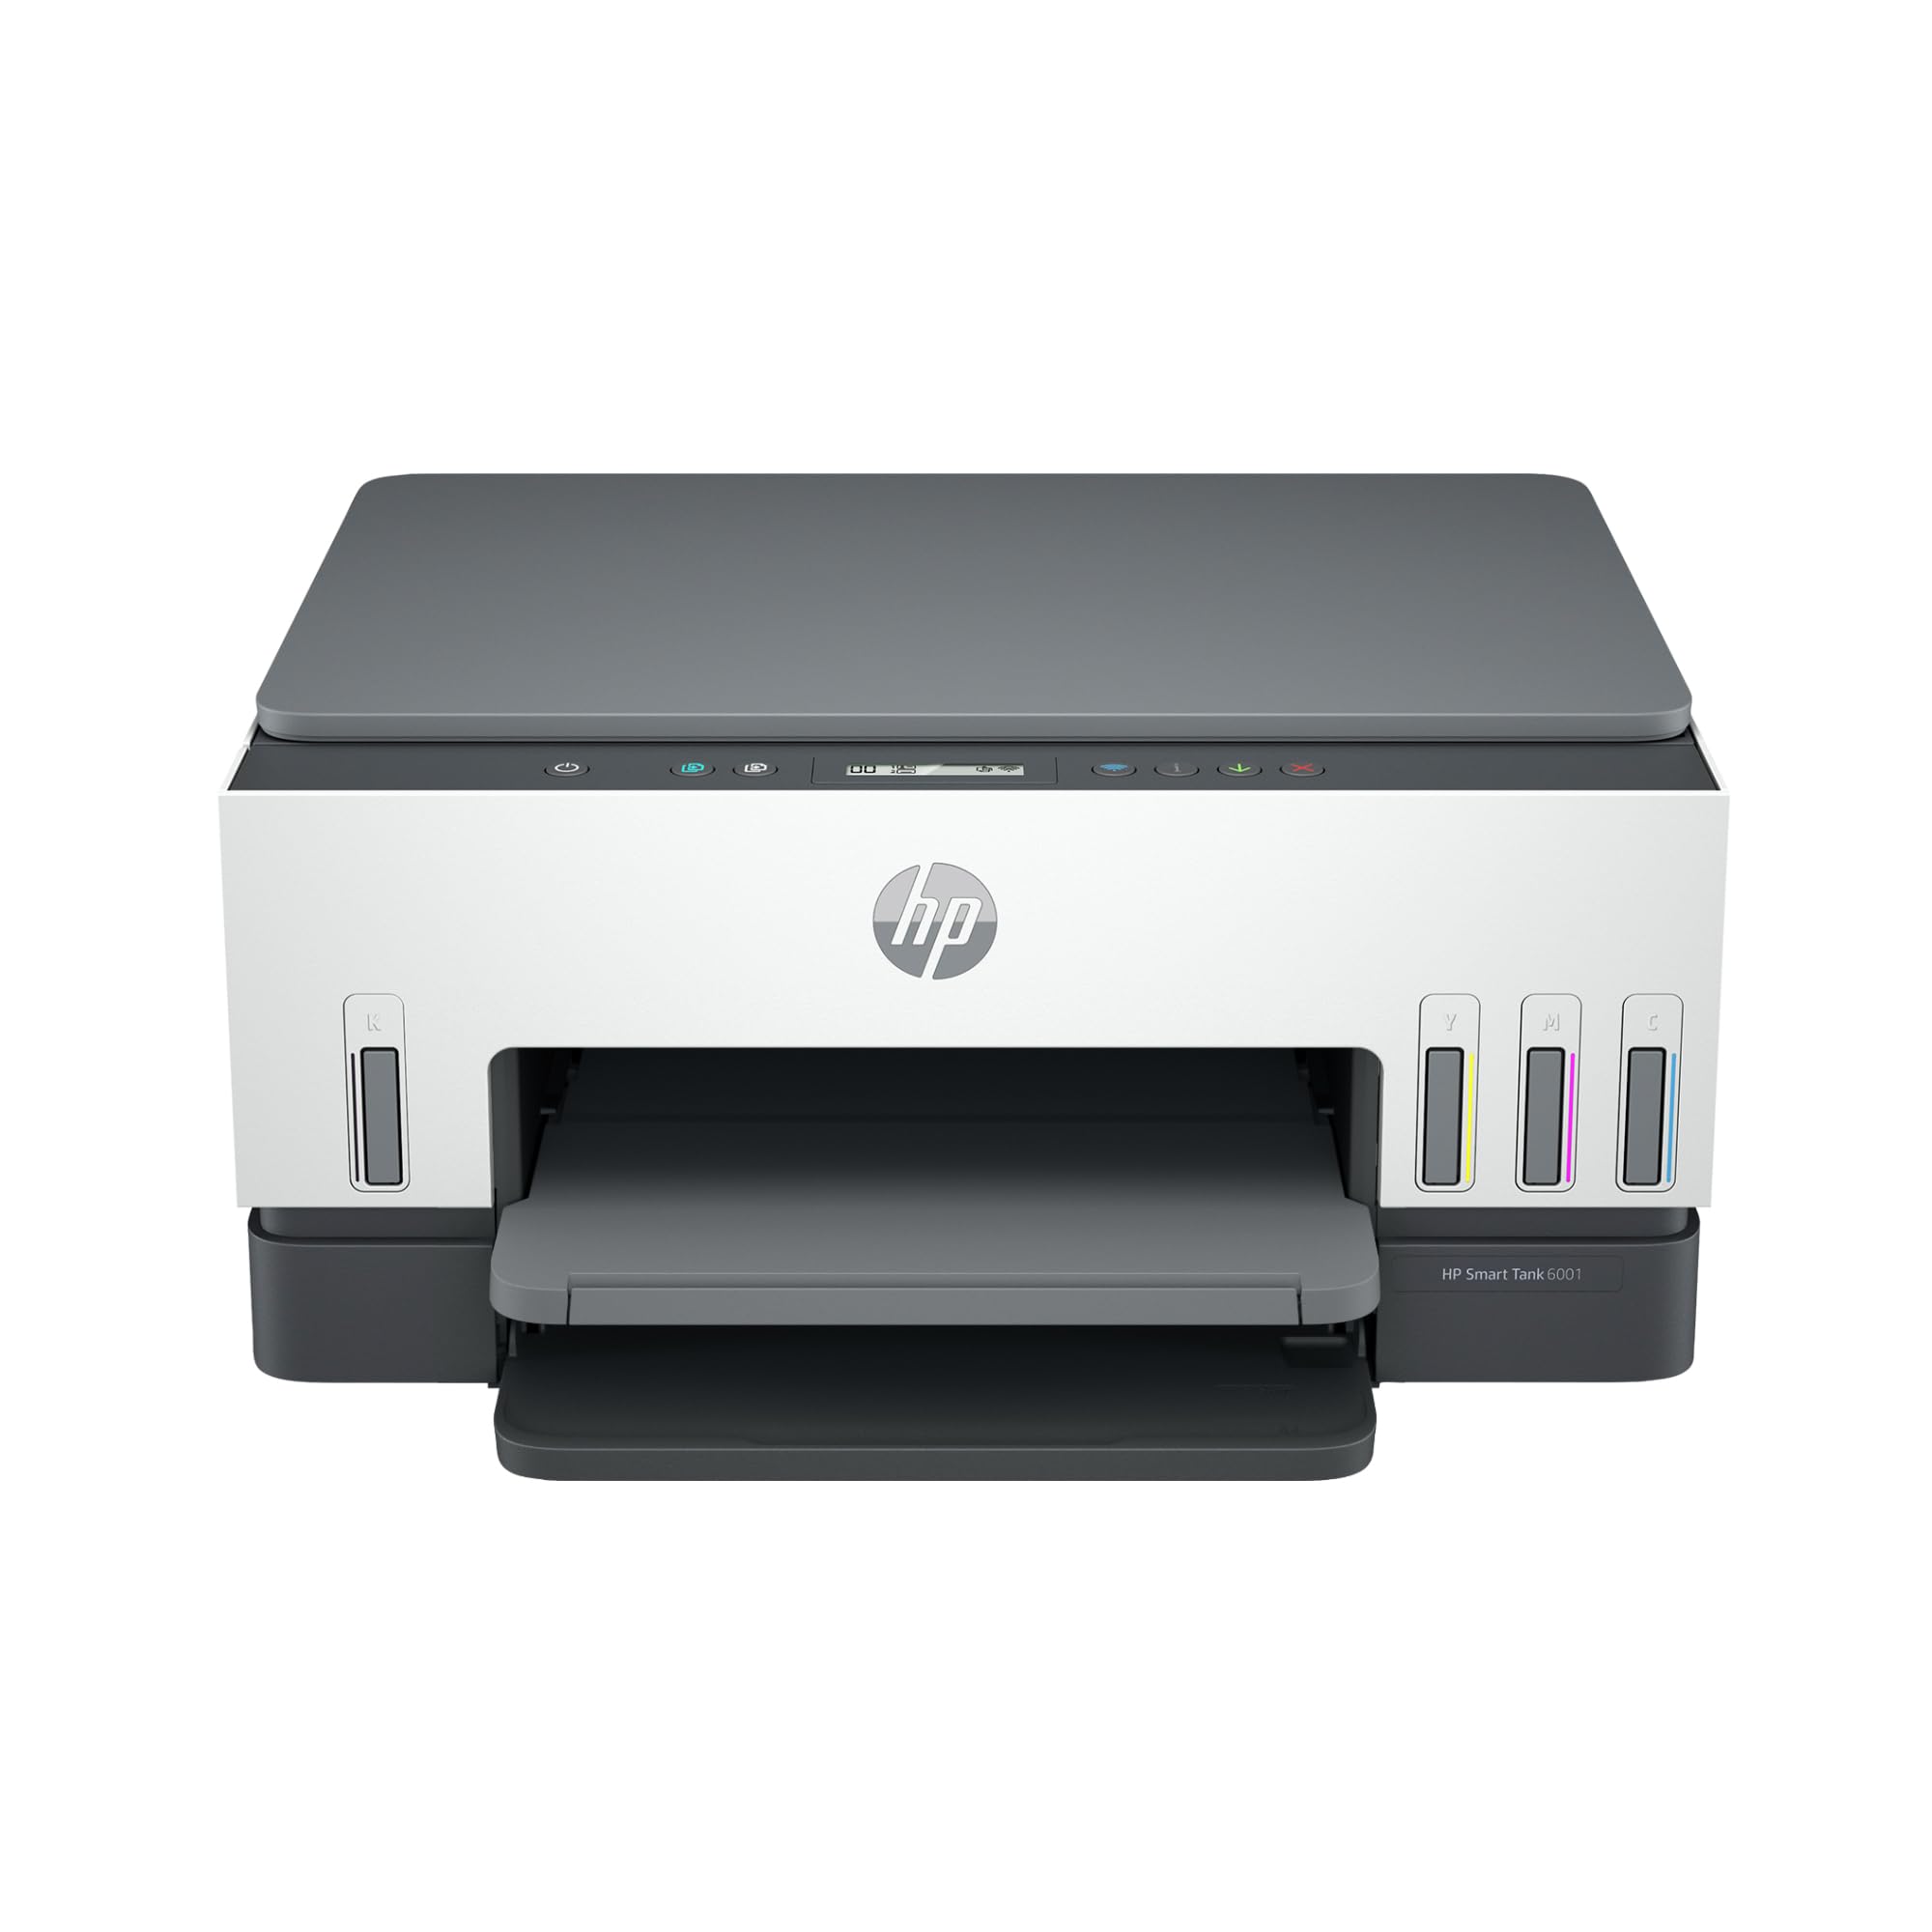 HP Smart Tank 6001 无线无墨盒一体式打印机，这款墨盒打印机附带长达 2 年的墨水，可移动打印...